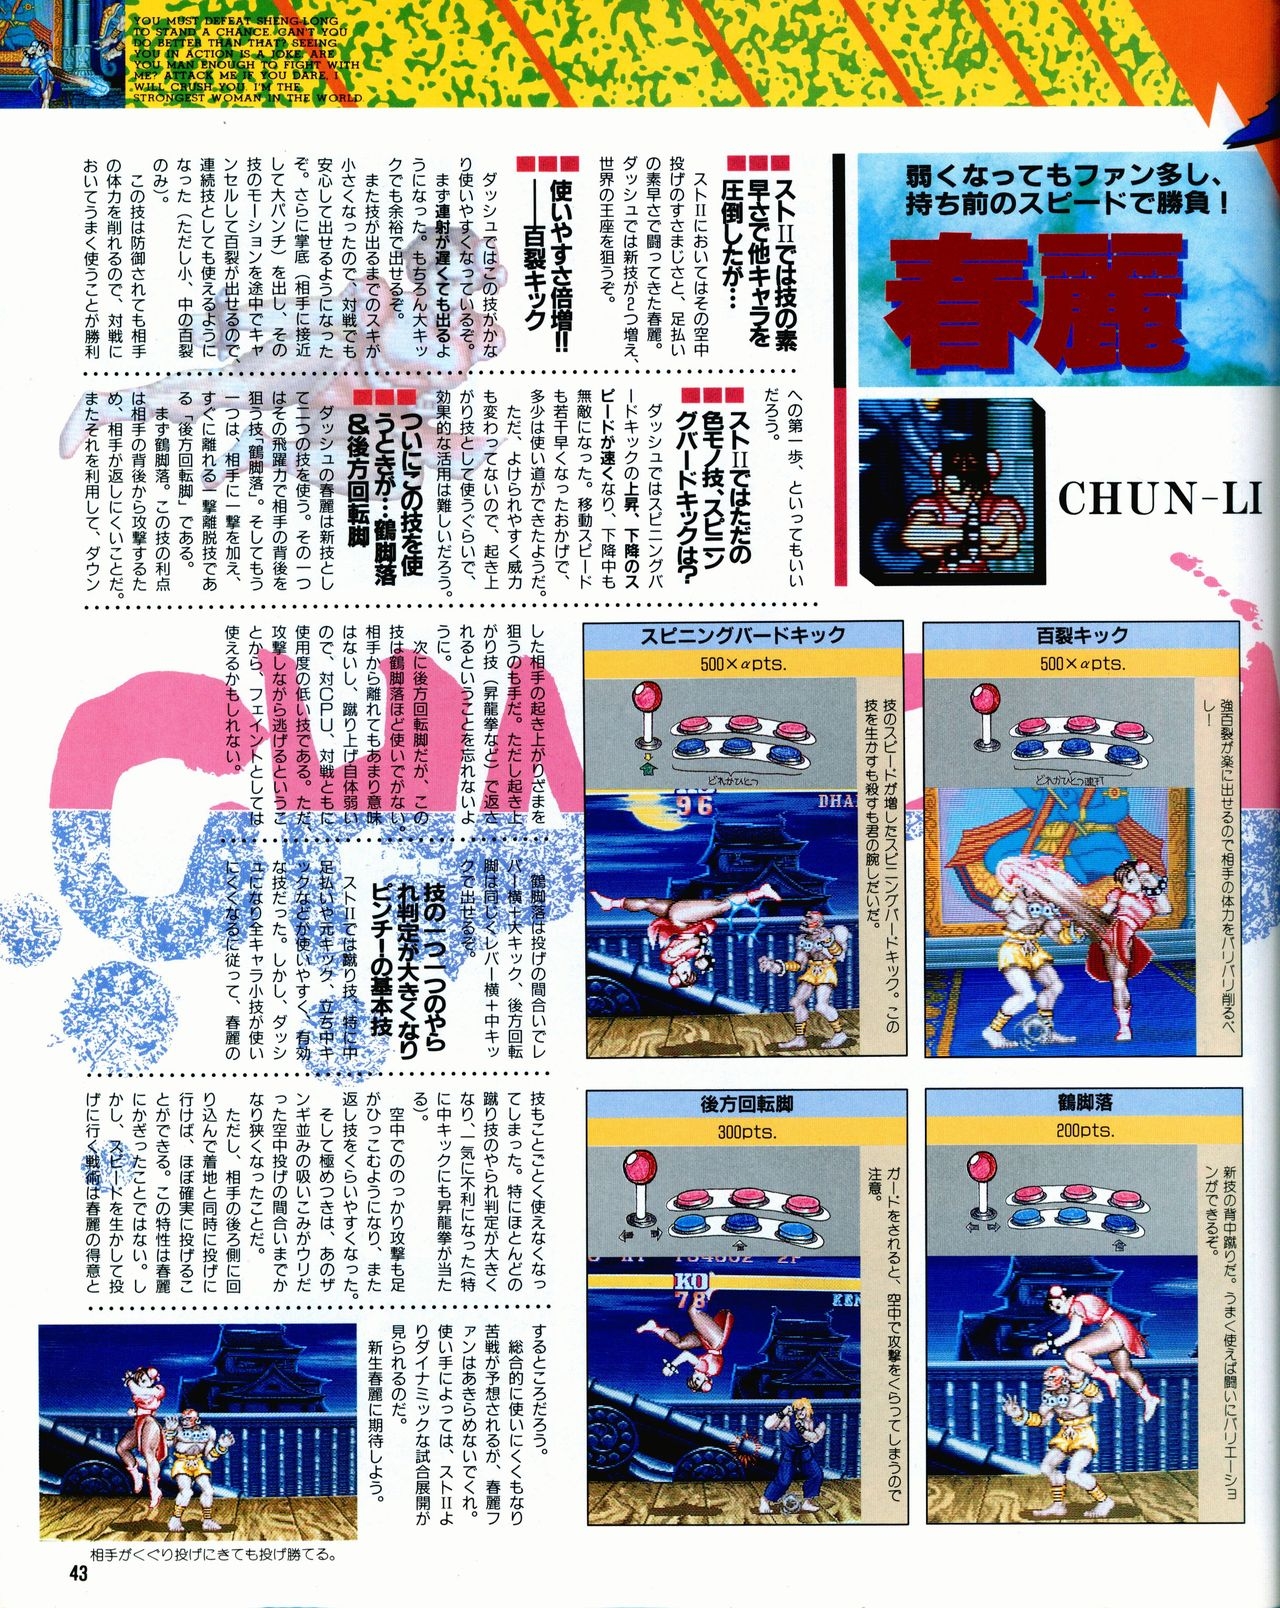 Street Fighter II Dash - Gamest special issue 77 44